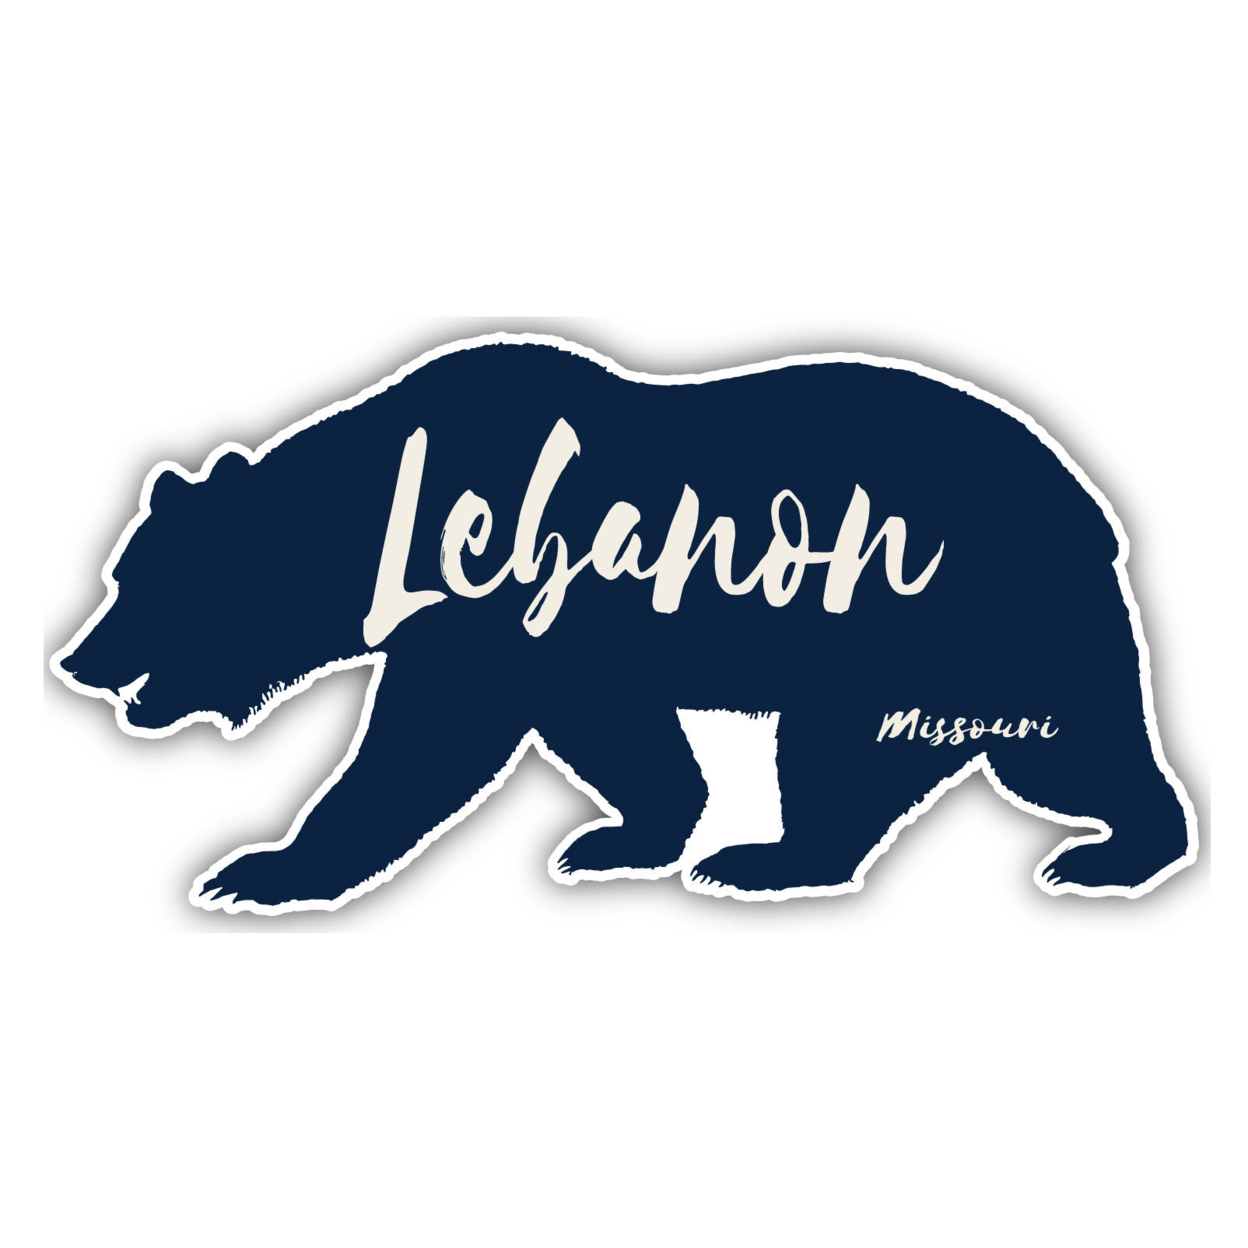 Lebanon Missouri Souvenir Decorative Stickers (Choose Theme And Size) - 4-Inch, Bear